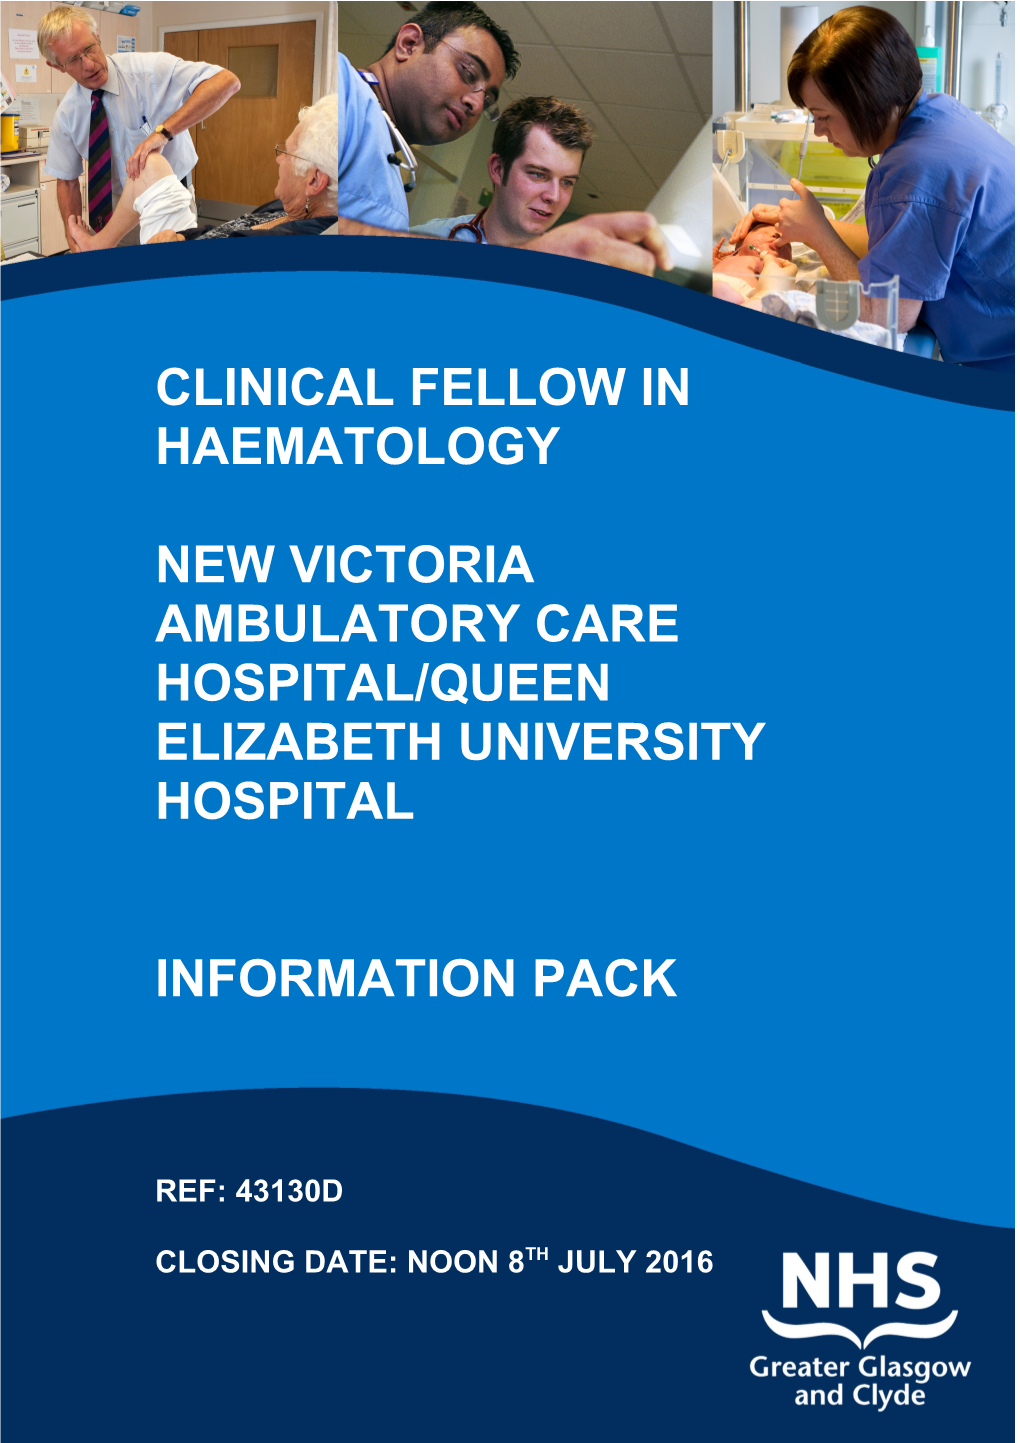 New Victoria AMBULATORY CARE HOSPITAL/Queen Elizabeth University Hospital